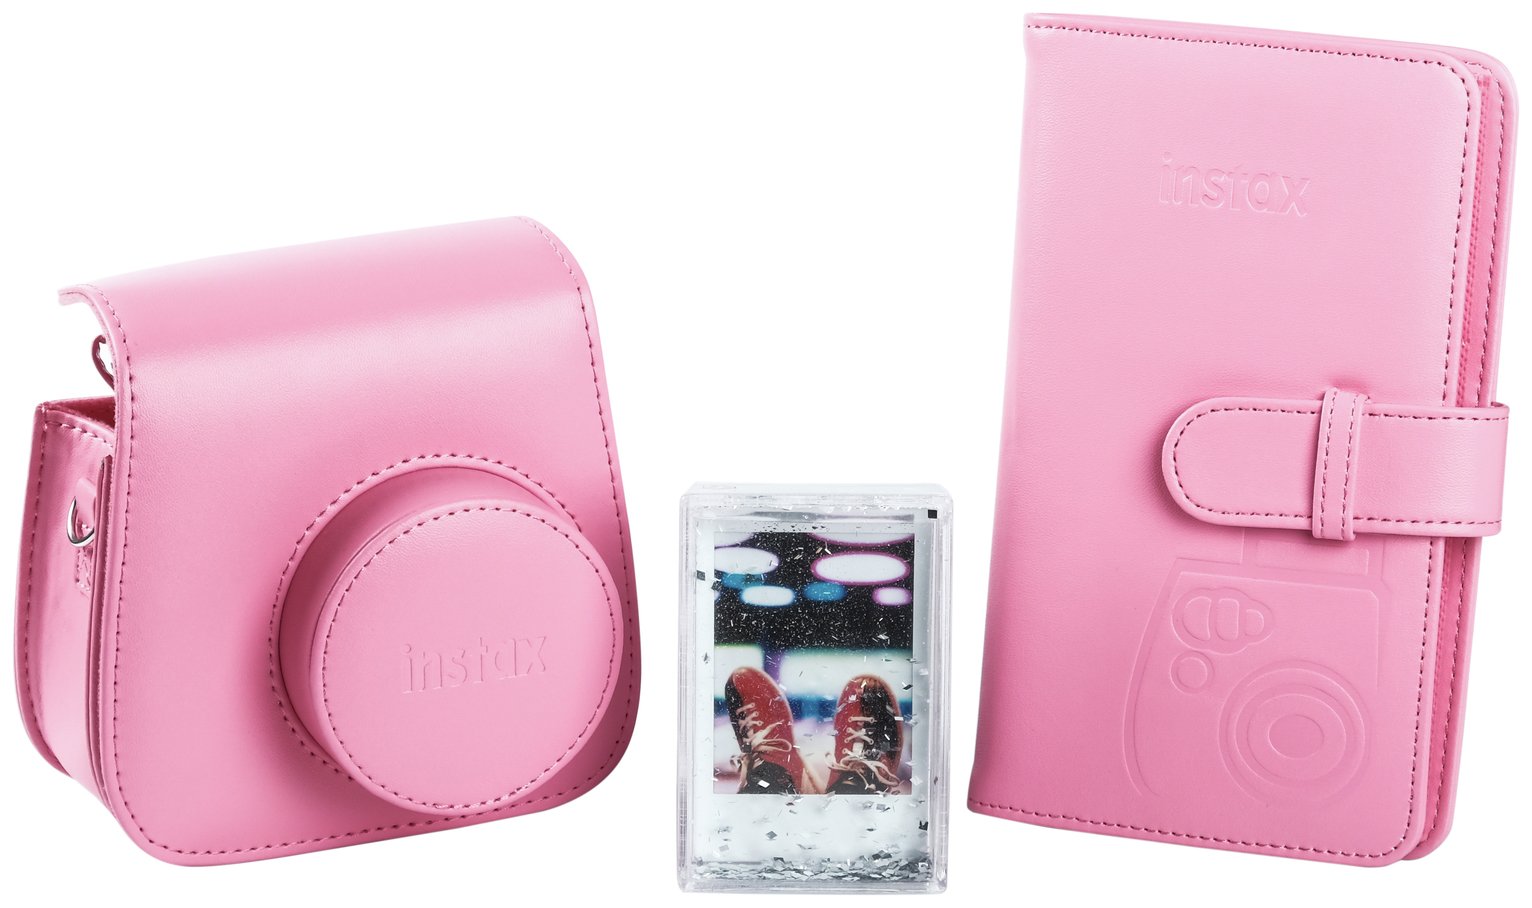 Instax Mini 9 Accessory Kit - Flamingo Pink